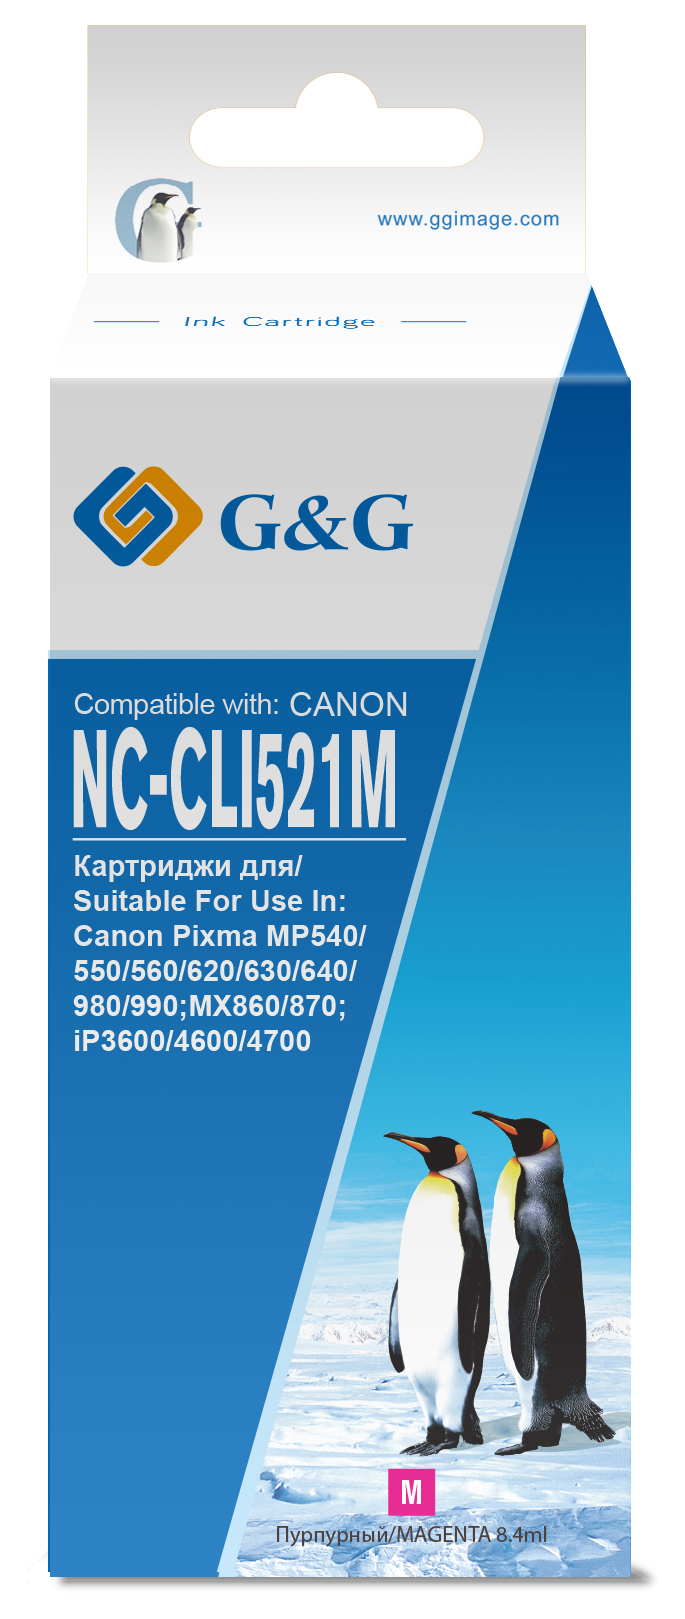 nc-cli521m_1